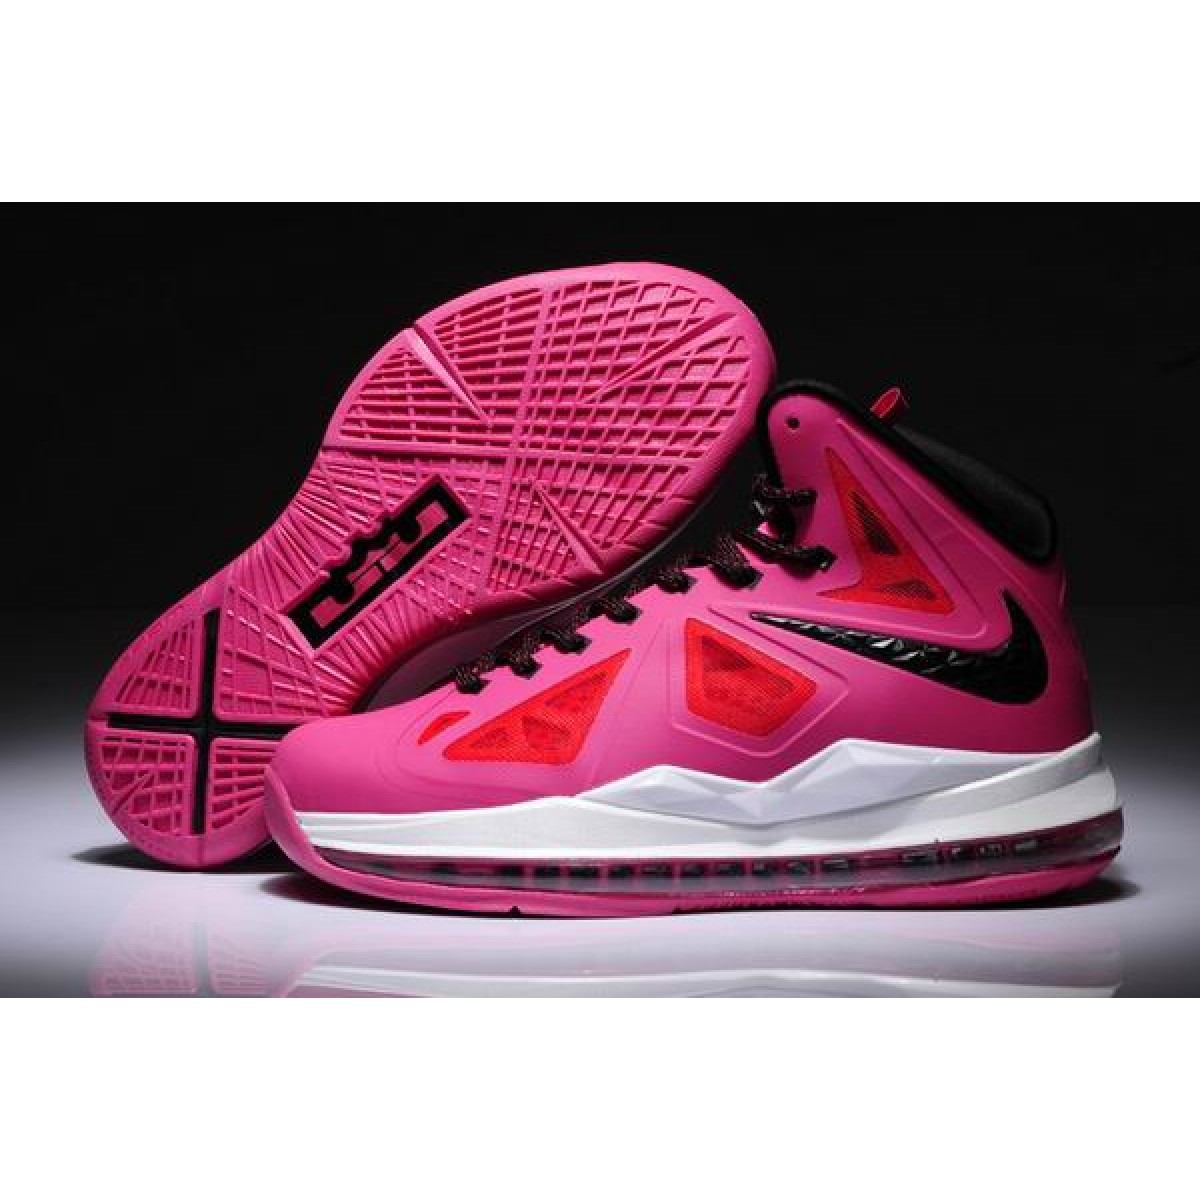 lebron james shoes pink